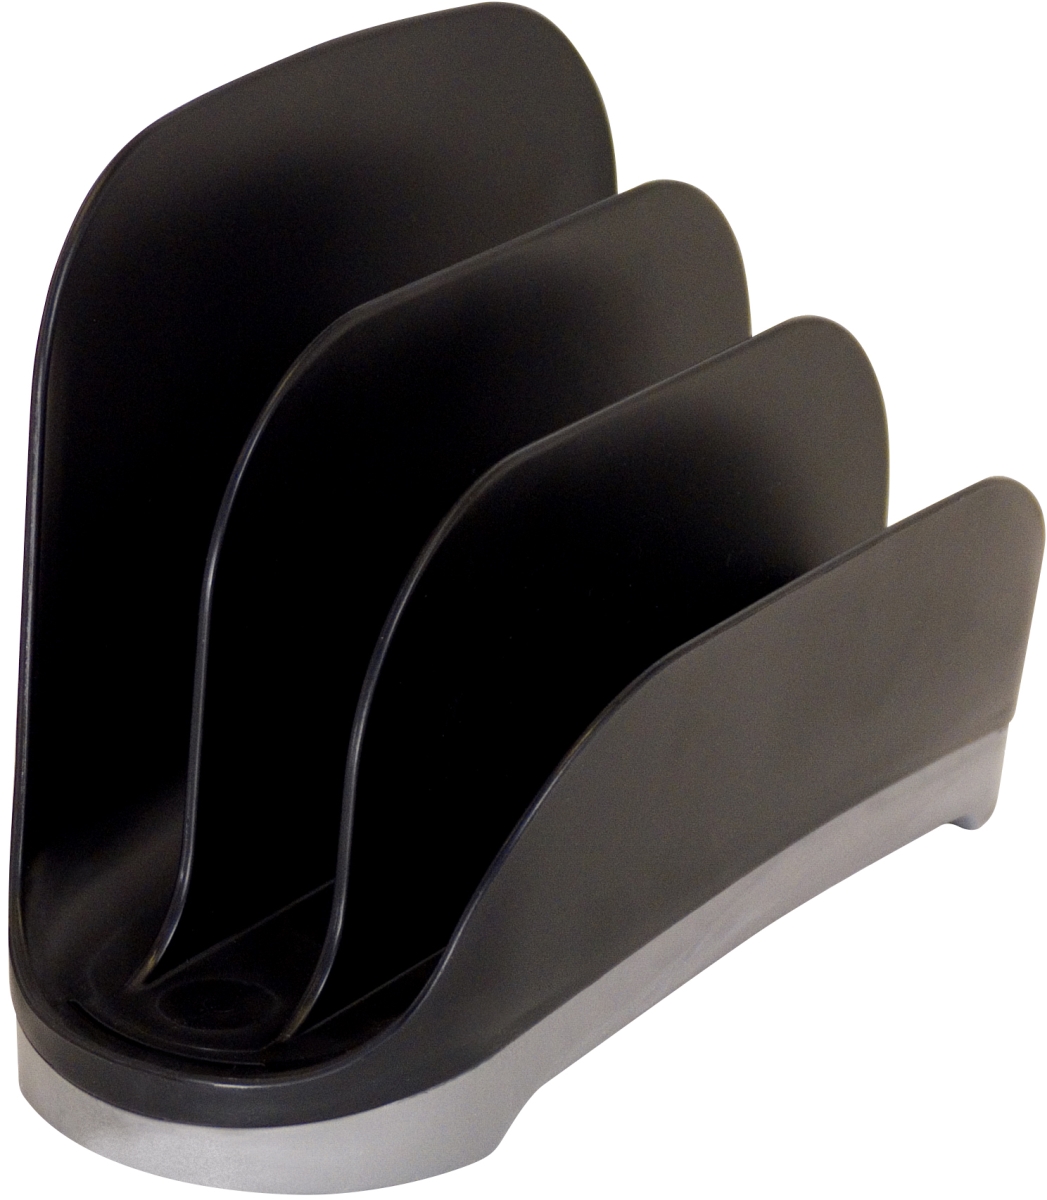 00112b06c Iceland-series Rubber Grip Vertical Sorter, Black - Pack Of 6